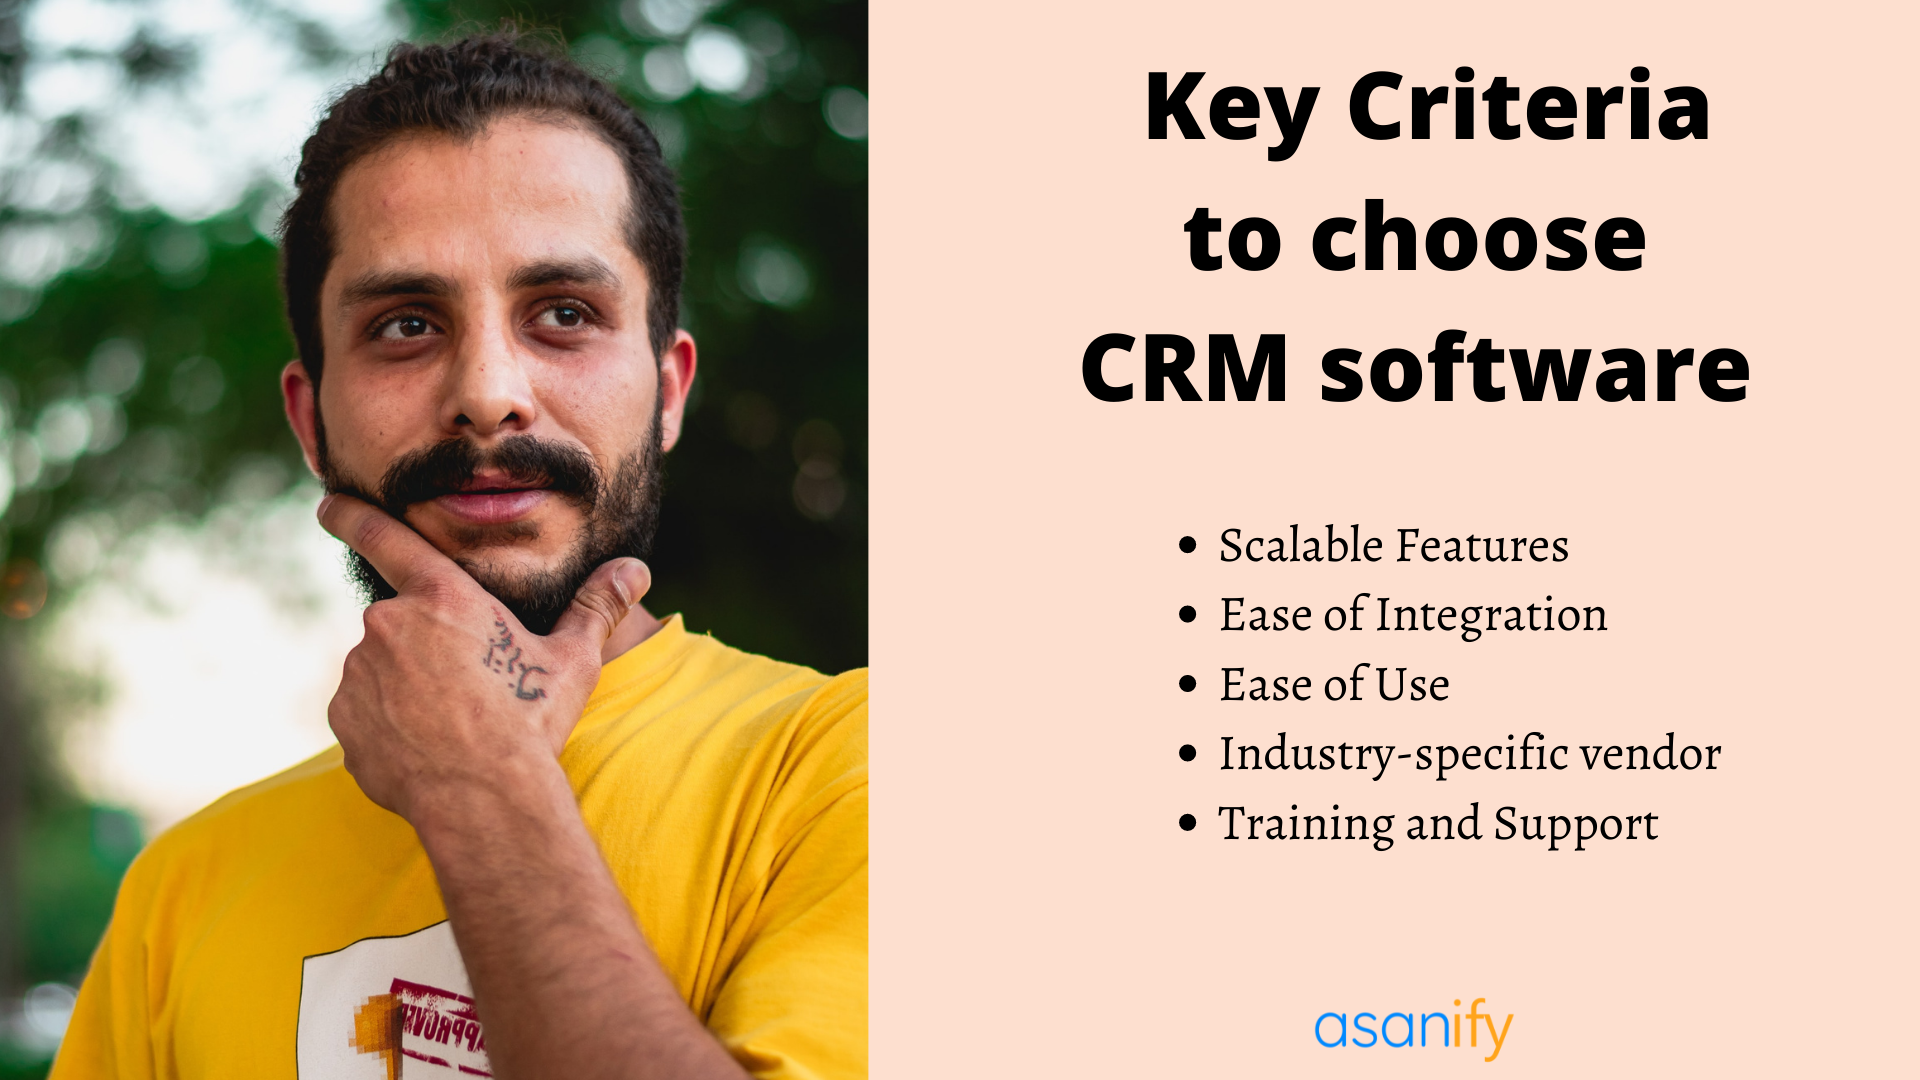 Key Criteria to choose CRM software